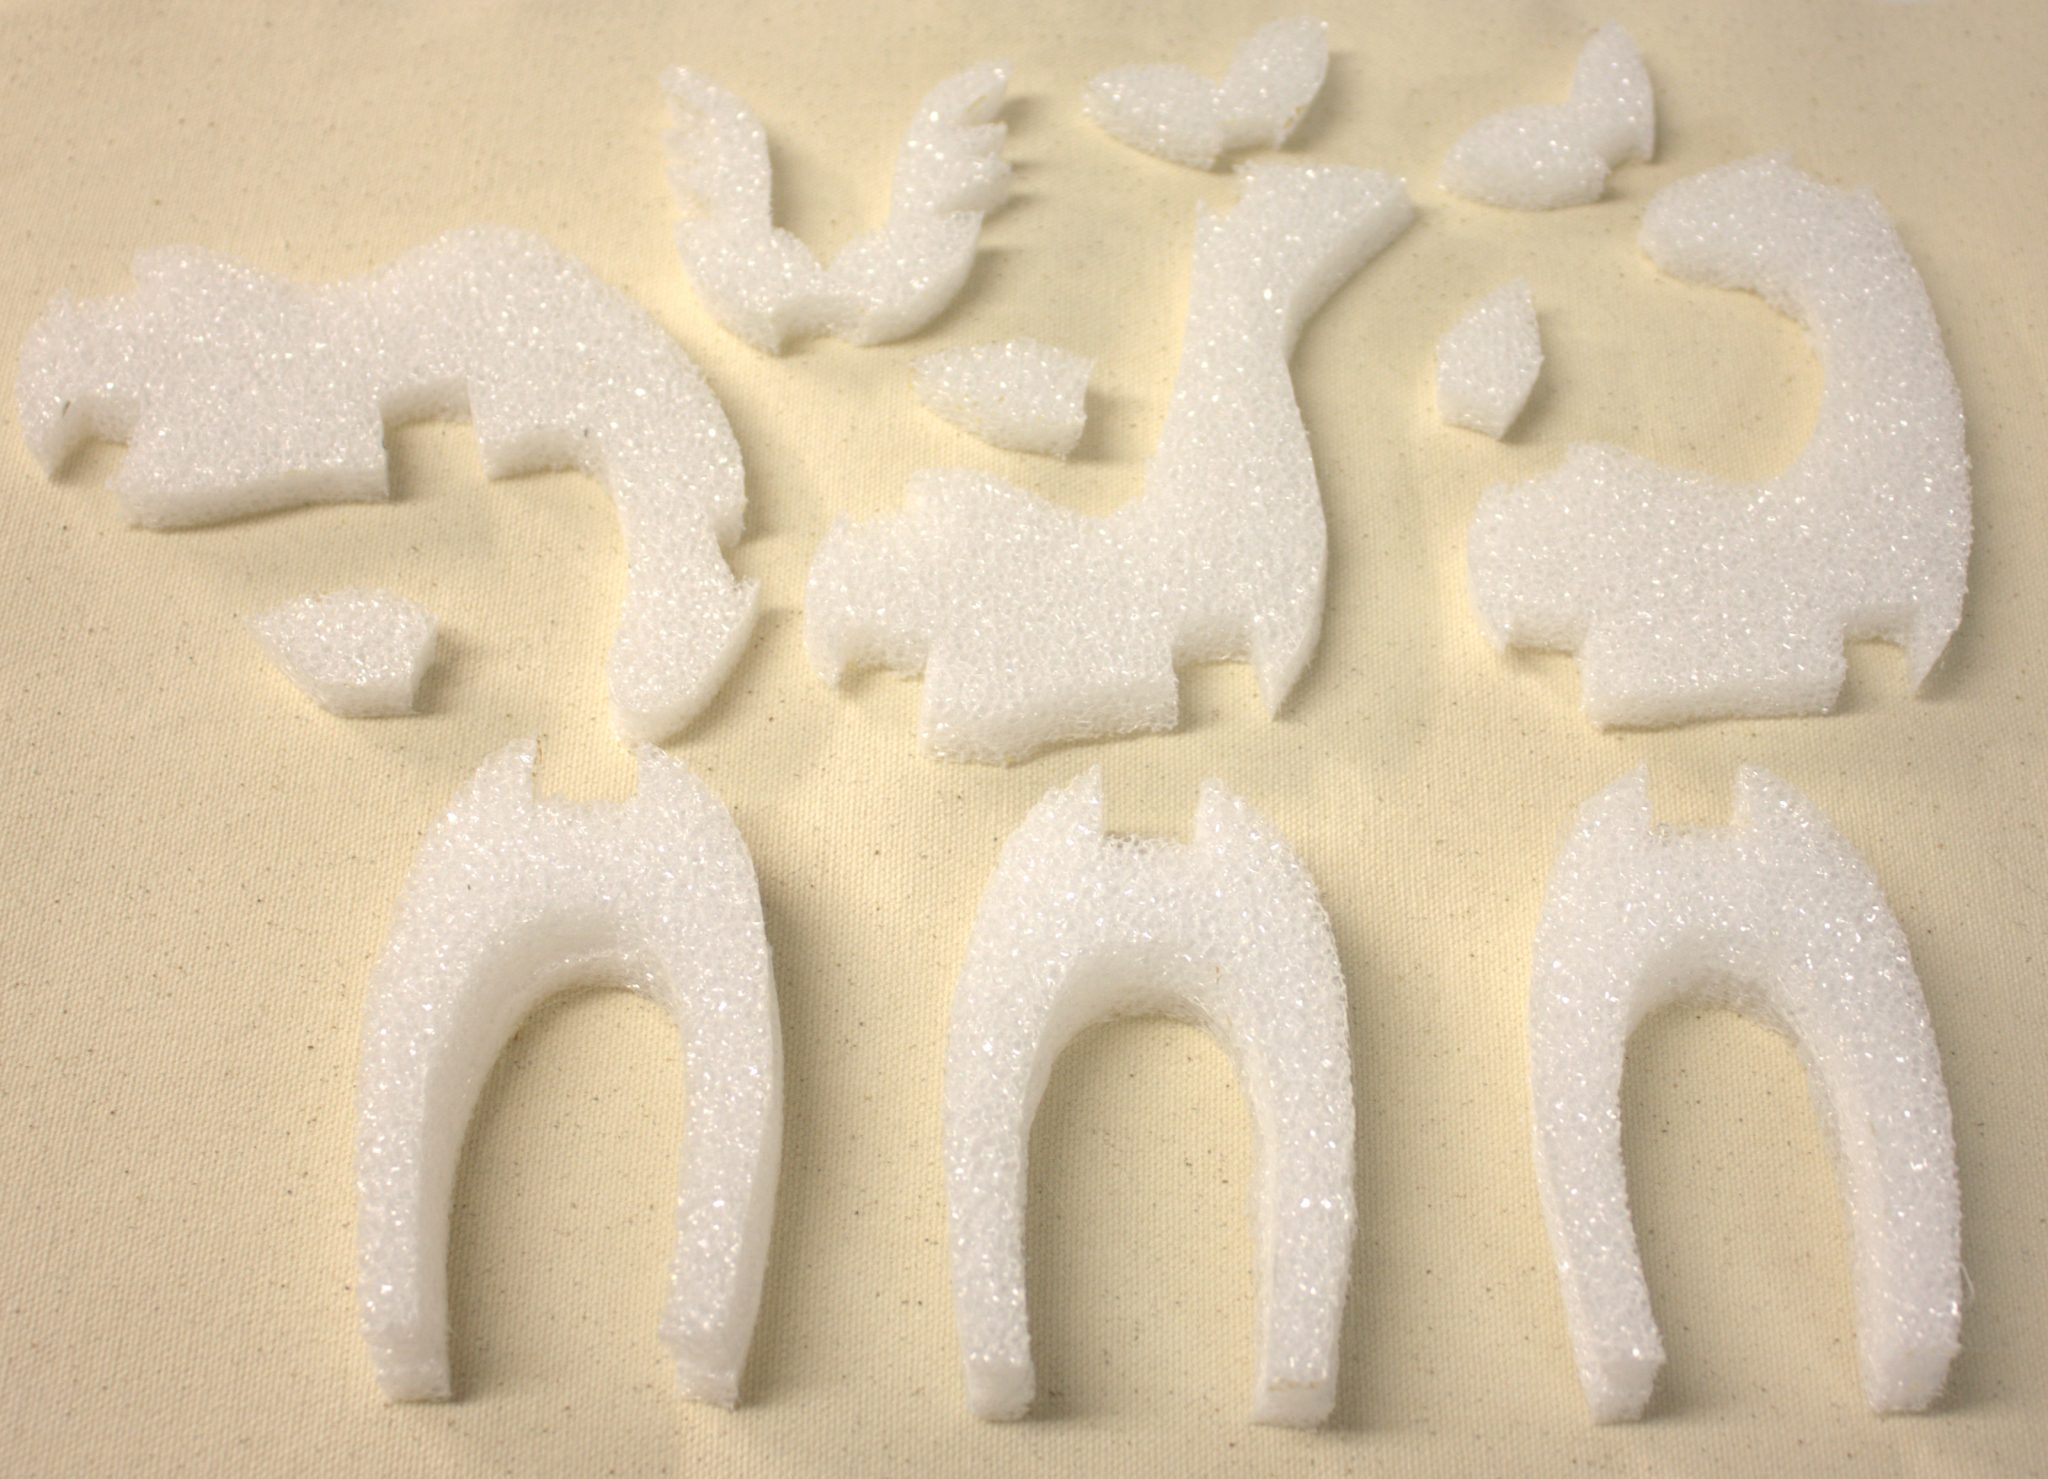 Styrofoam reindeer pieces cut out